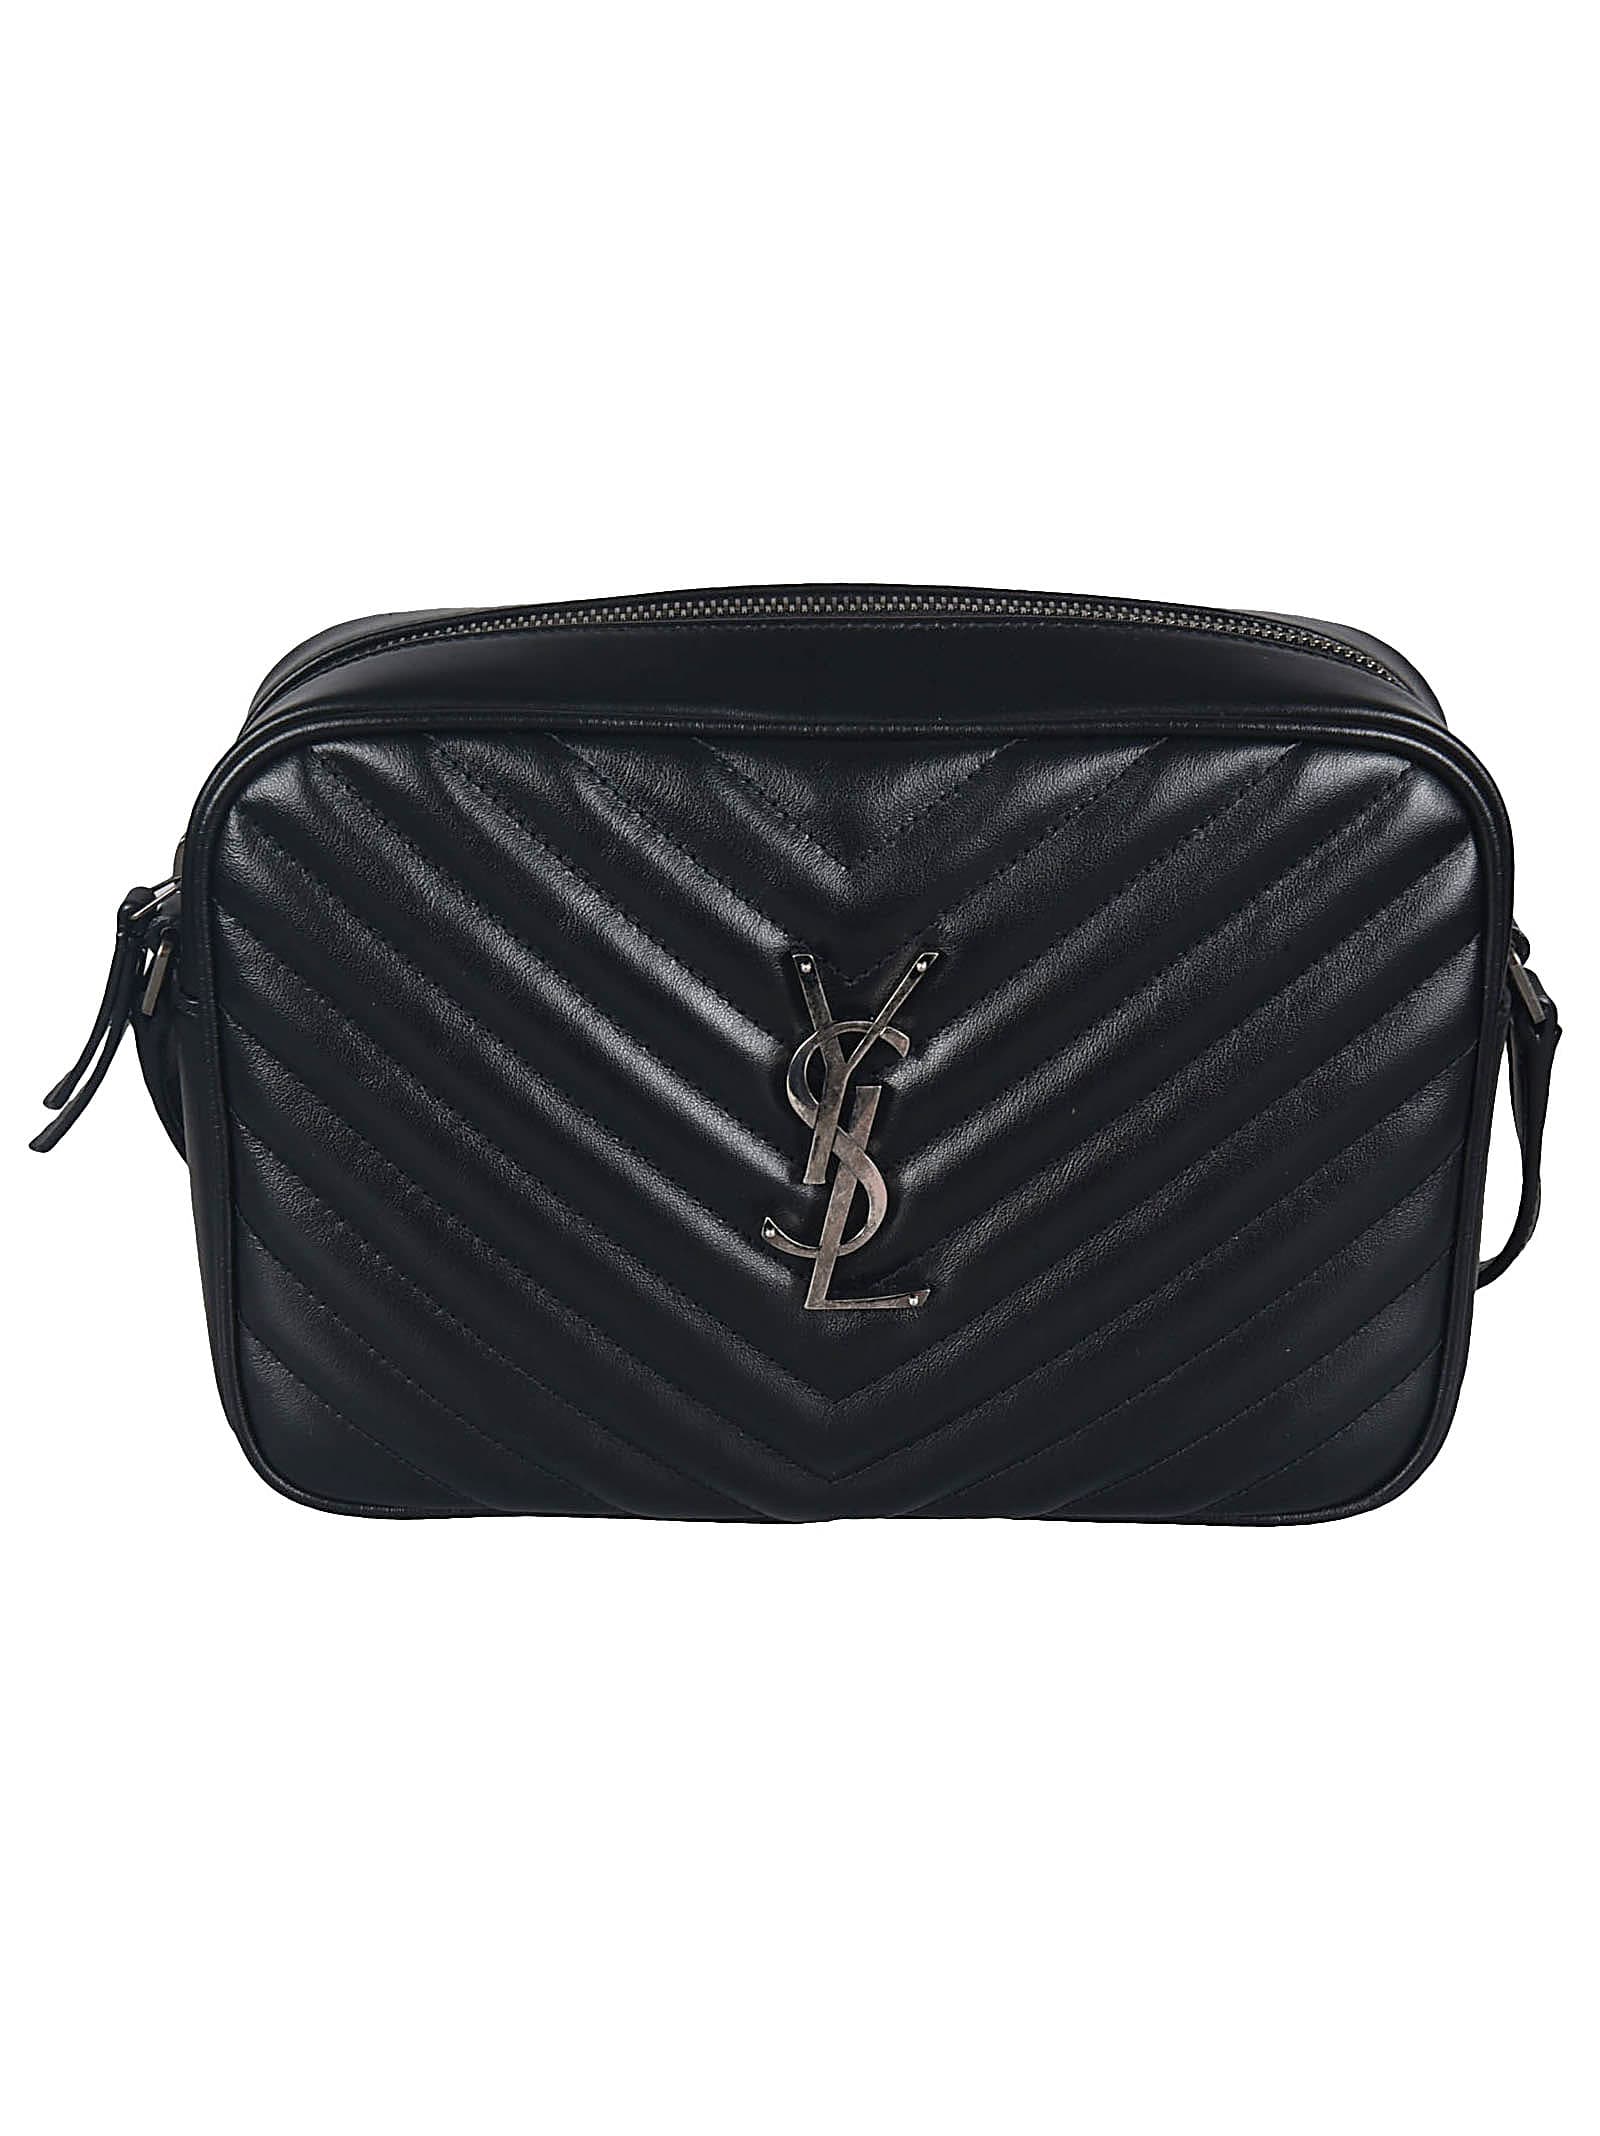 Saint Laurent Women's Medium Lou Matelassé Leather Camera Bag